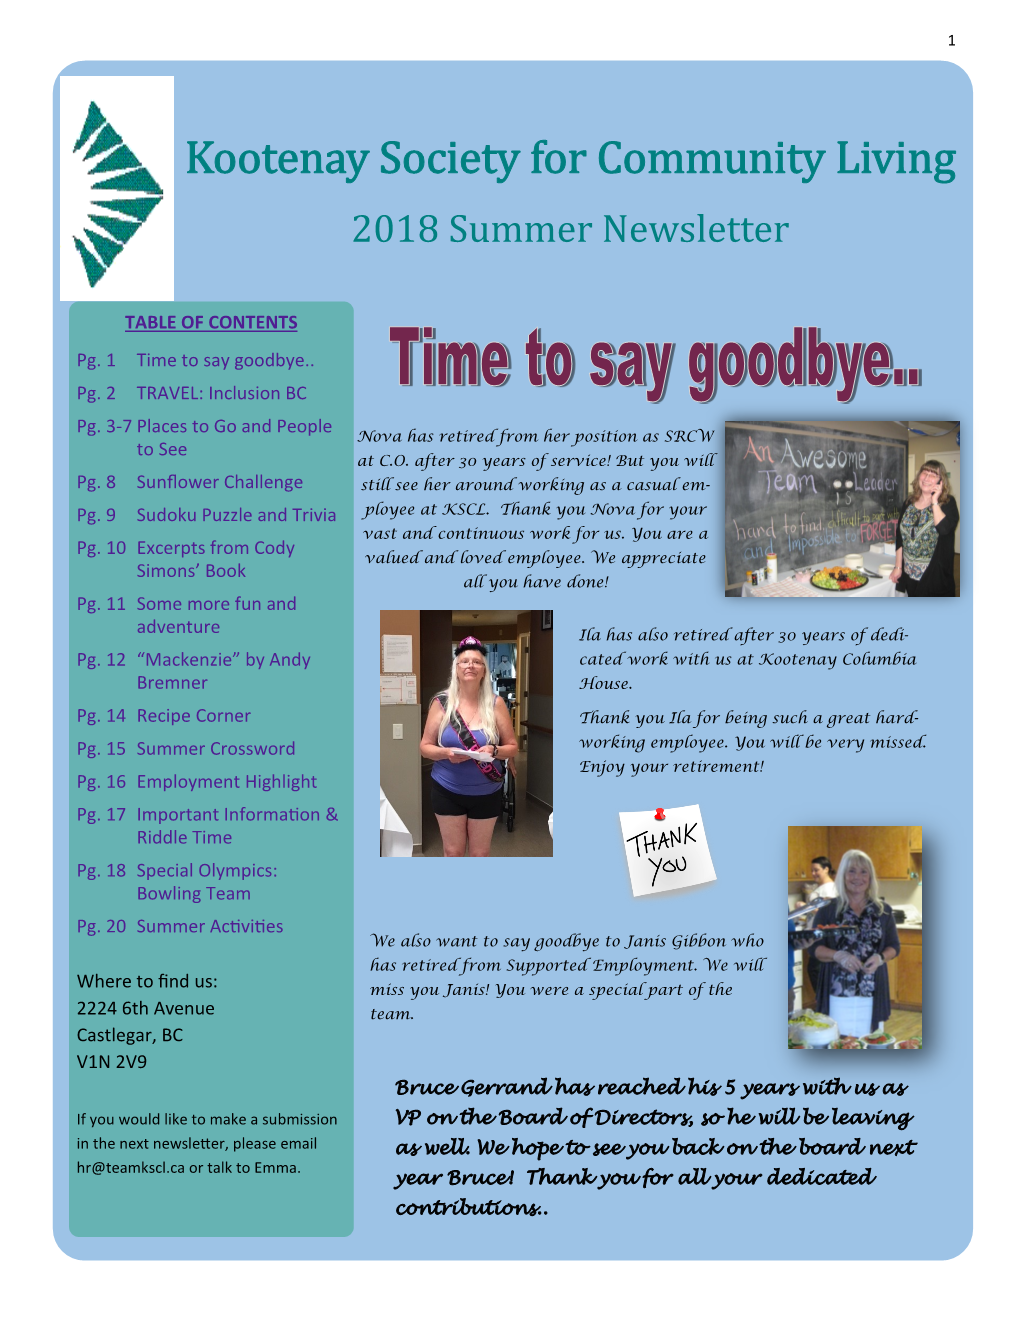 Kootenay Society for Community Living 2018 Summer Newsletter